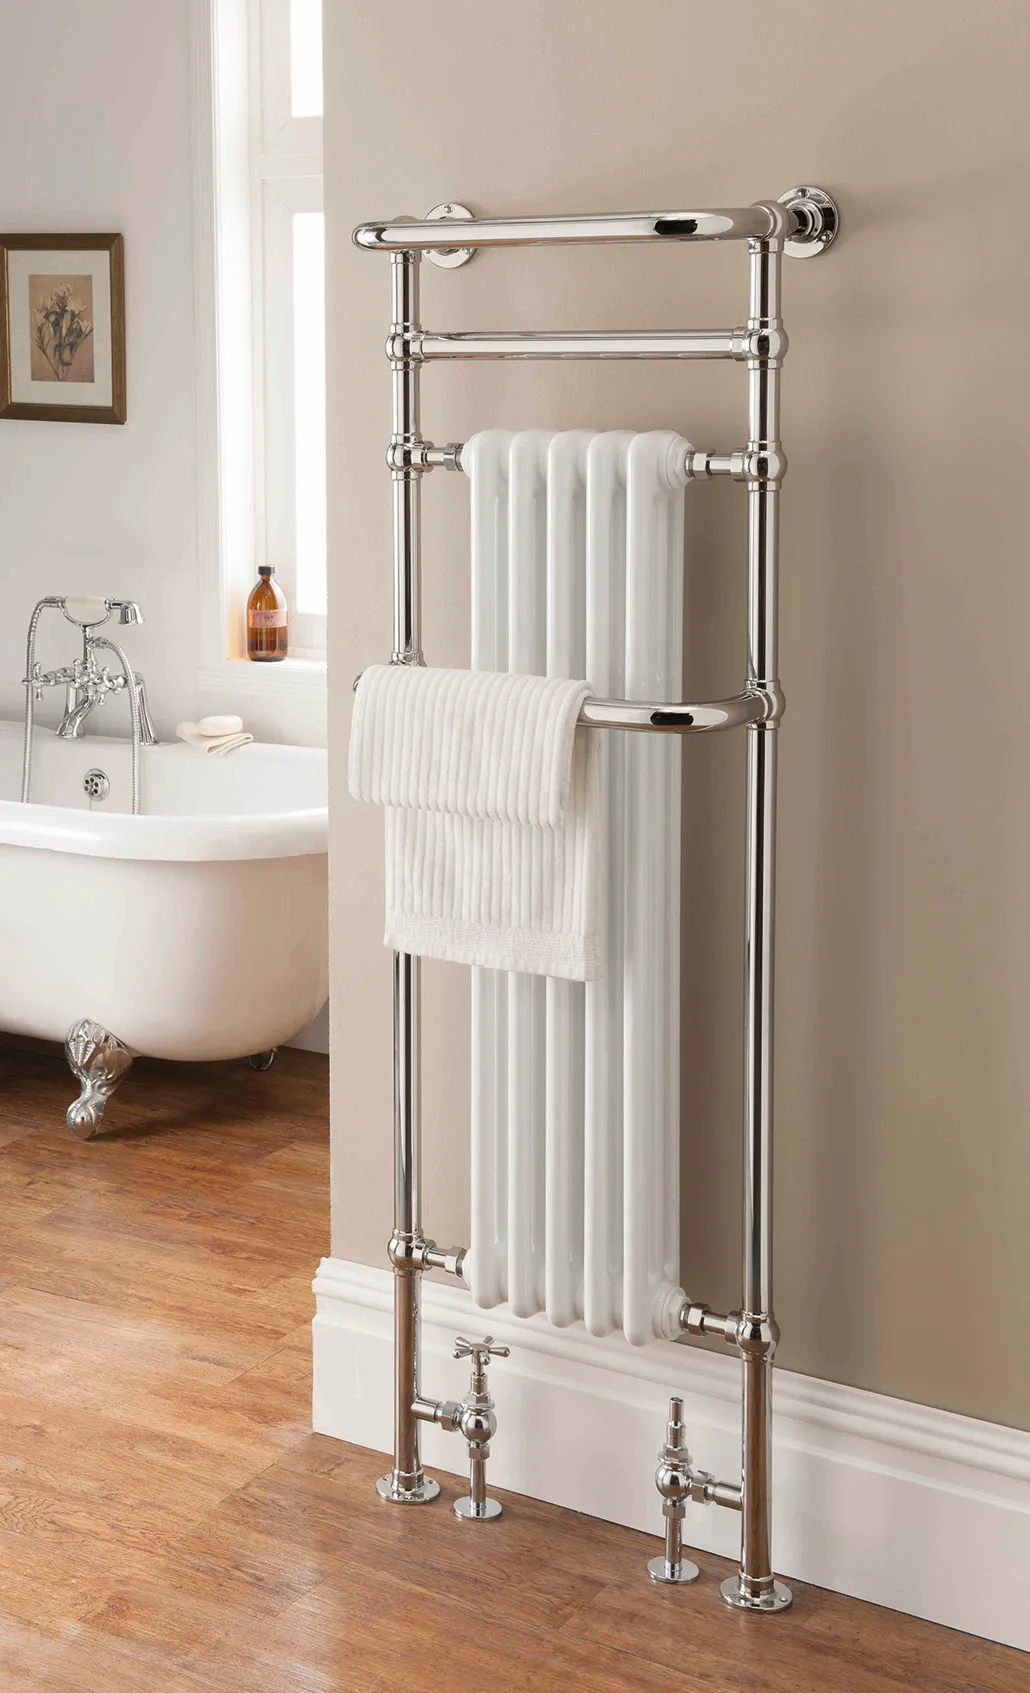 An antique-style heated towel rail